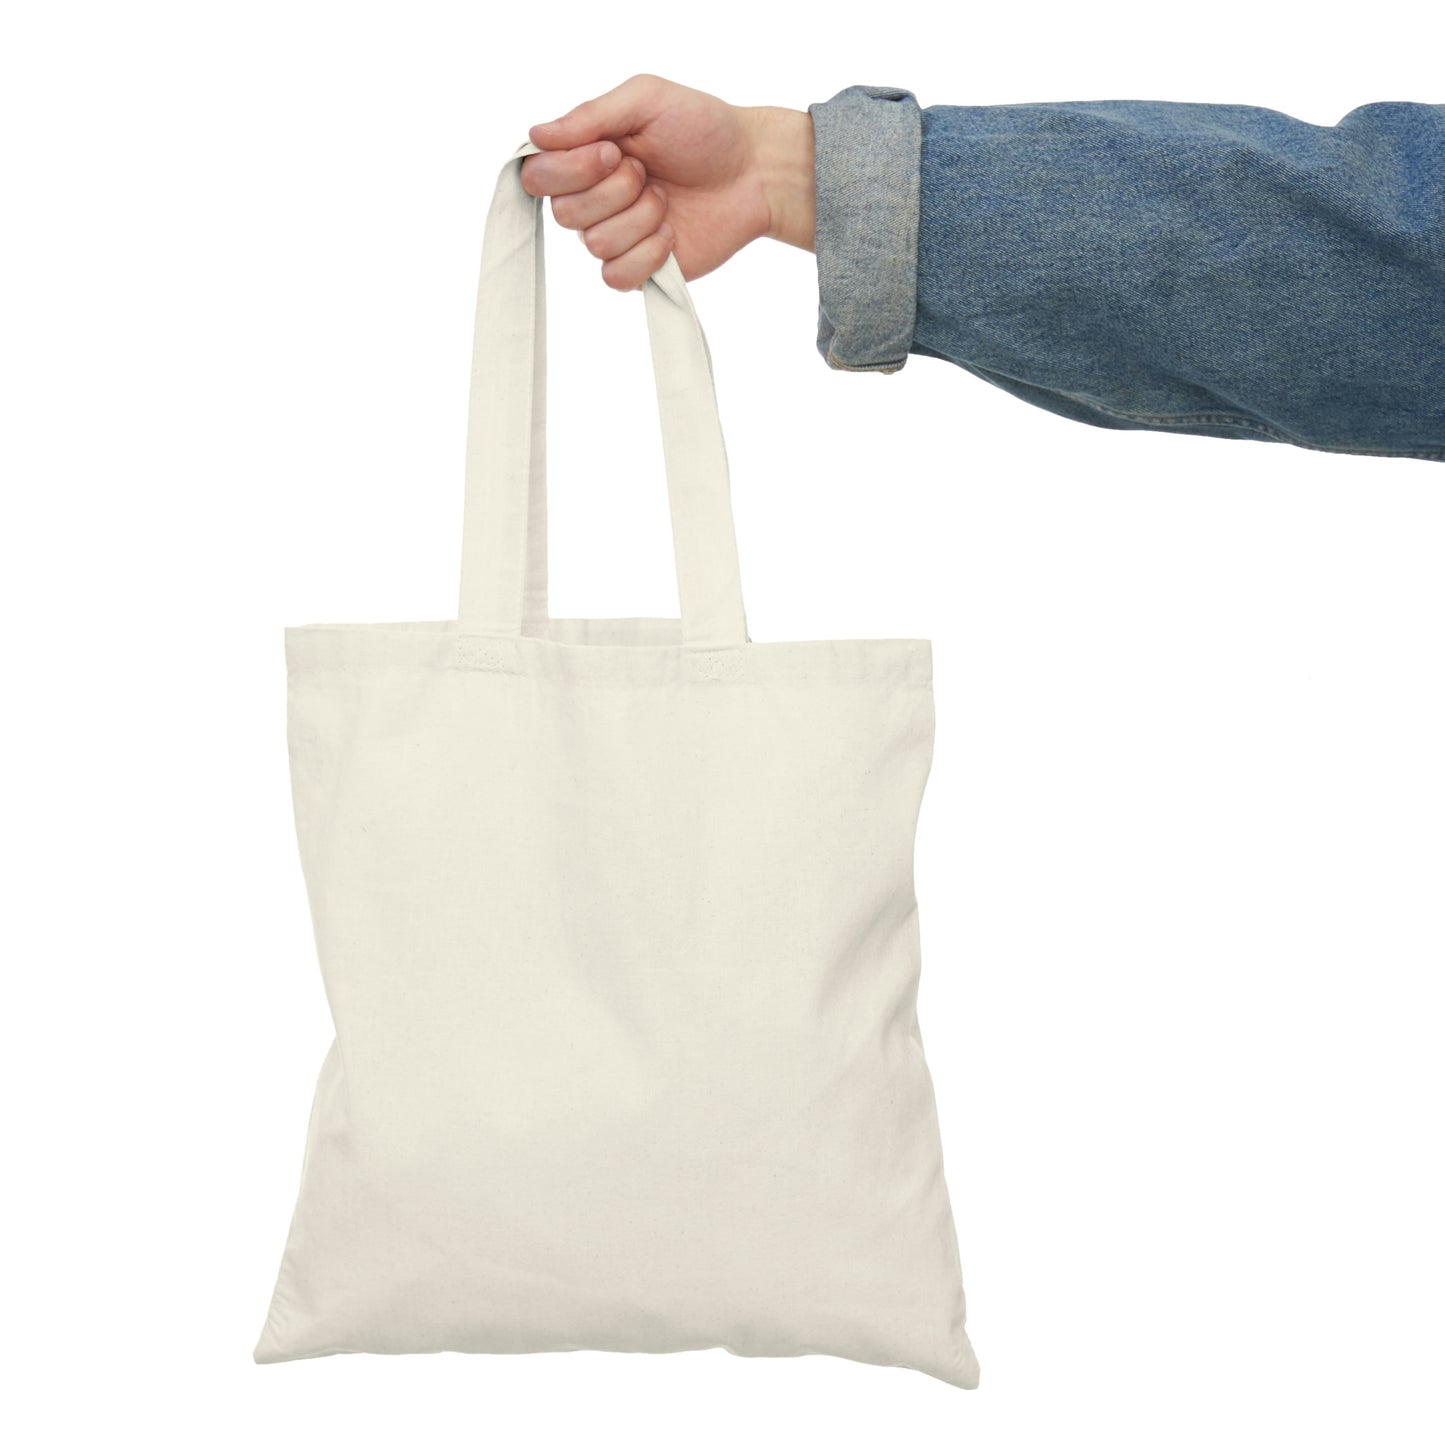 A Single Breath - Natural Tote Bag